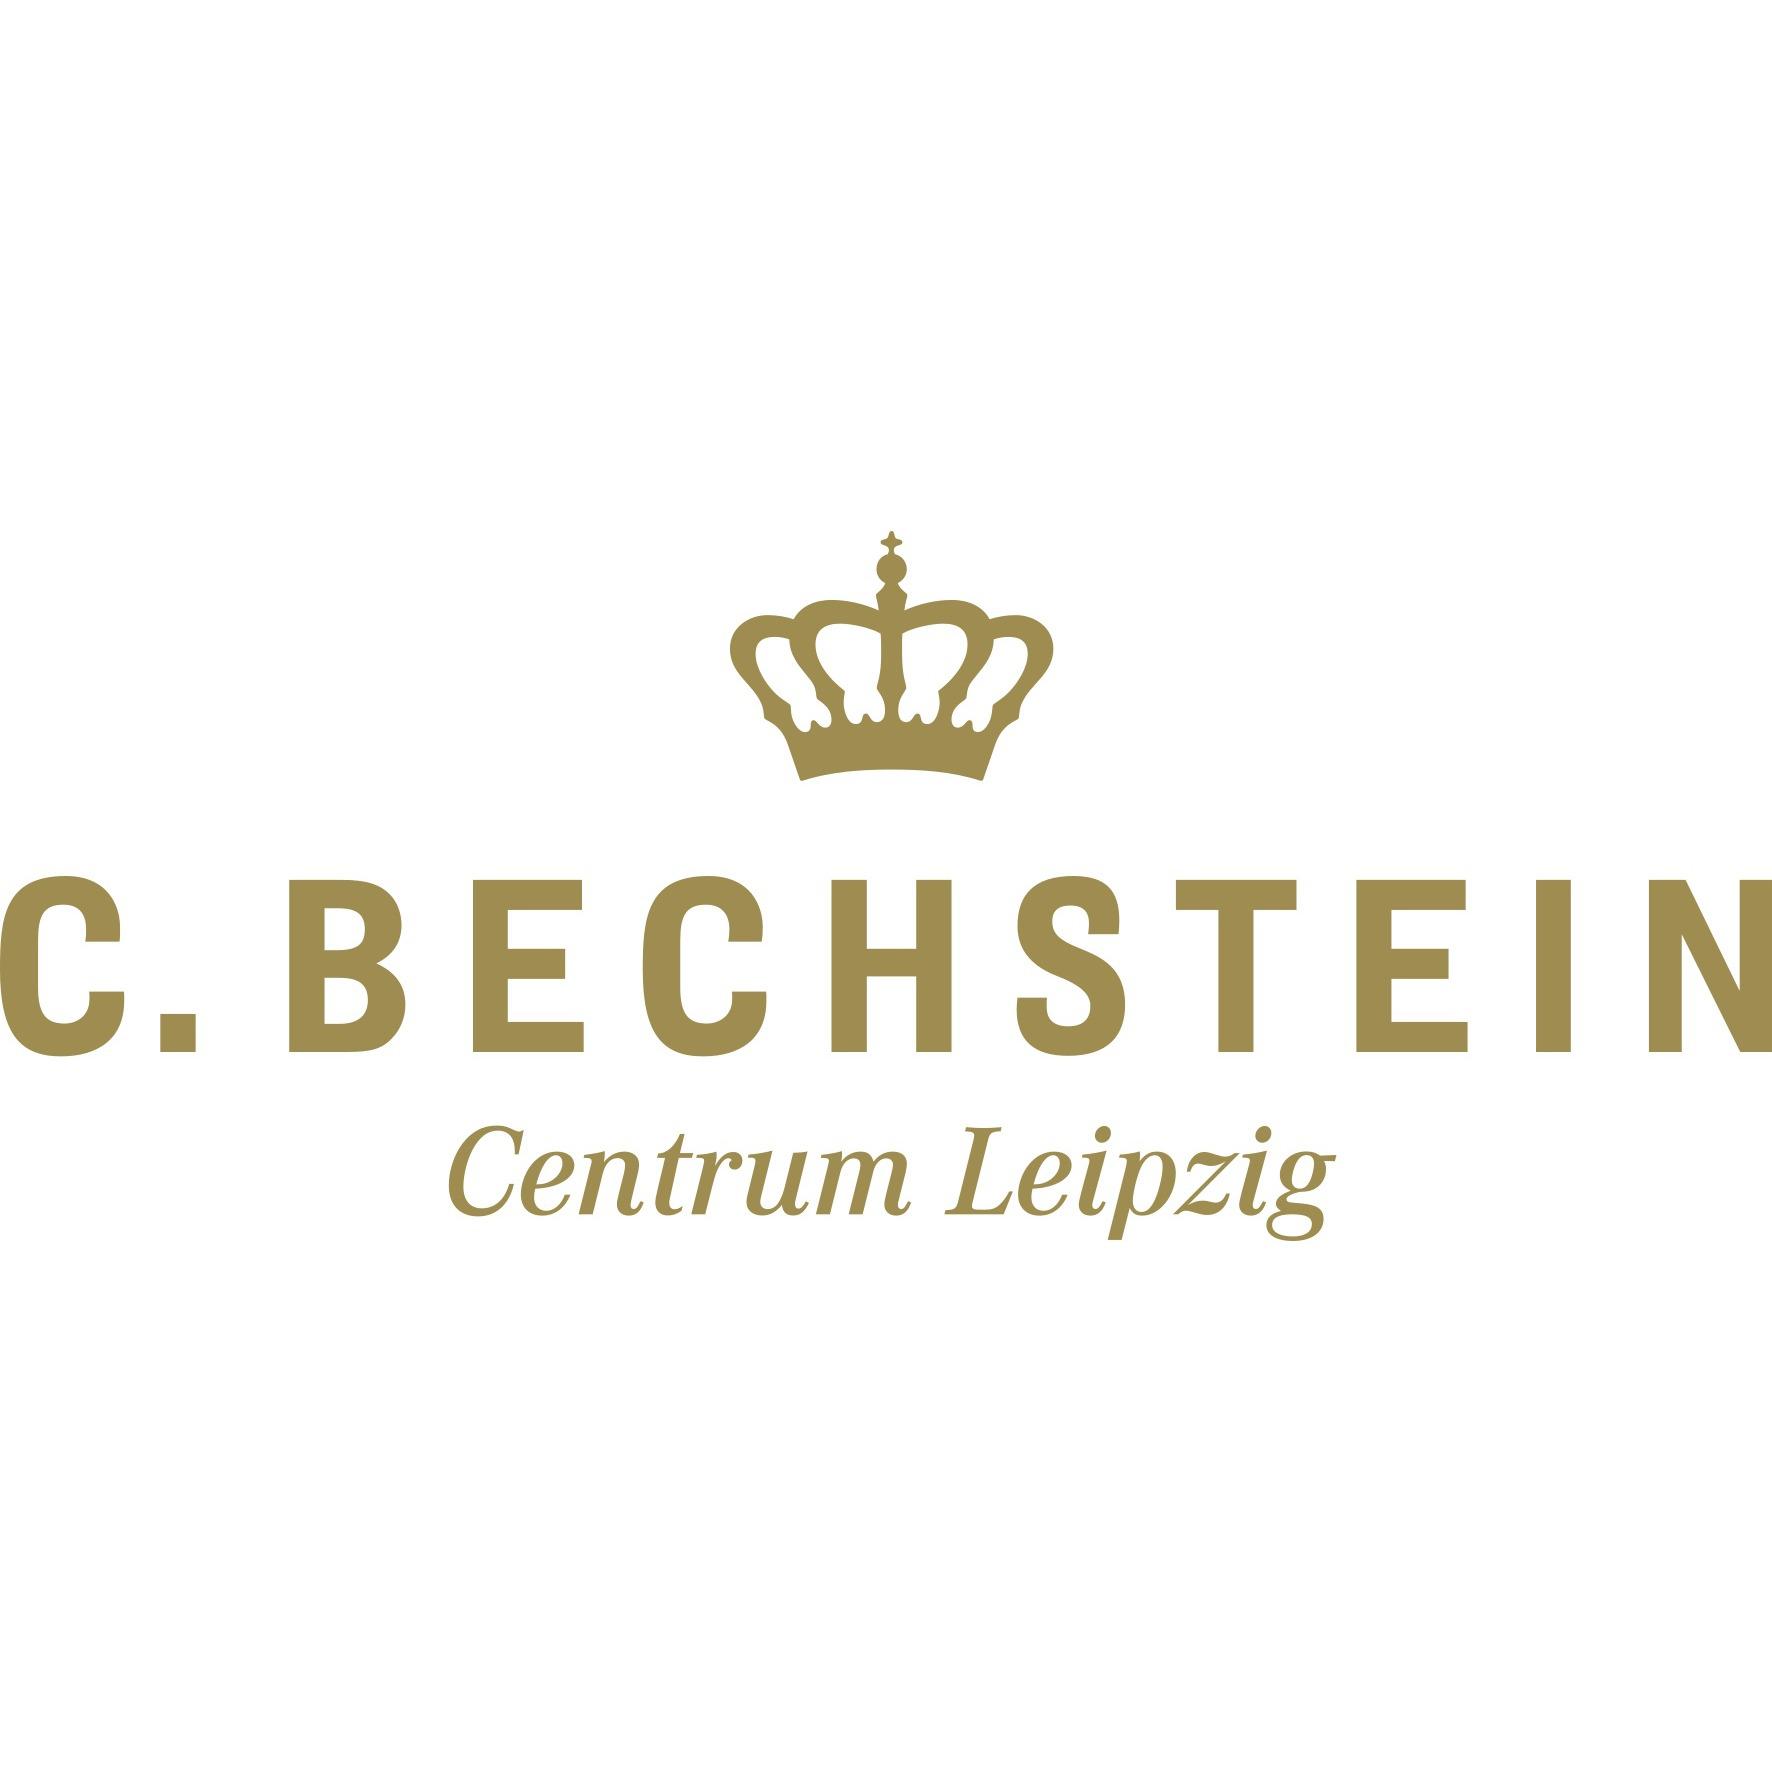 C. Bechstein Centrum Leipzig GmbH - Piano Store - Leipzig - 0341 26820900 Germany | ShowMeLocal.com